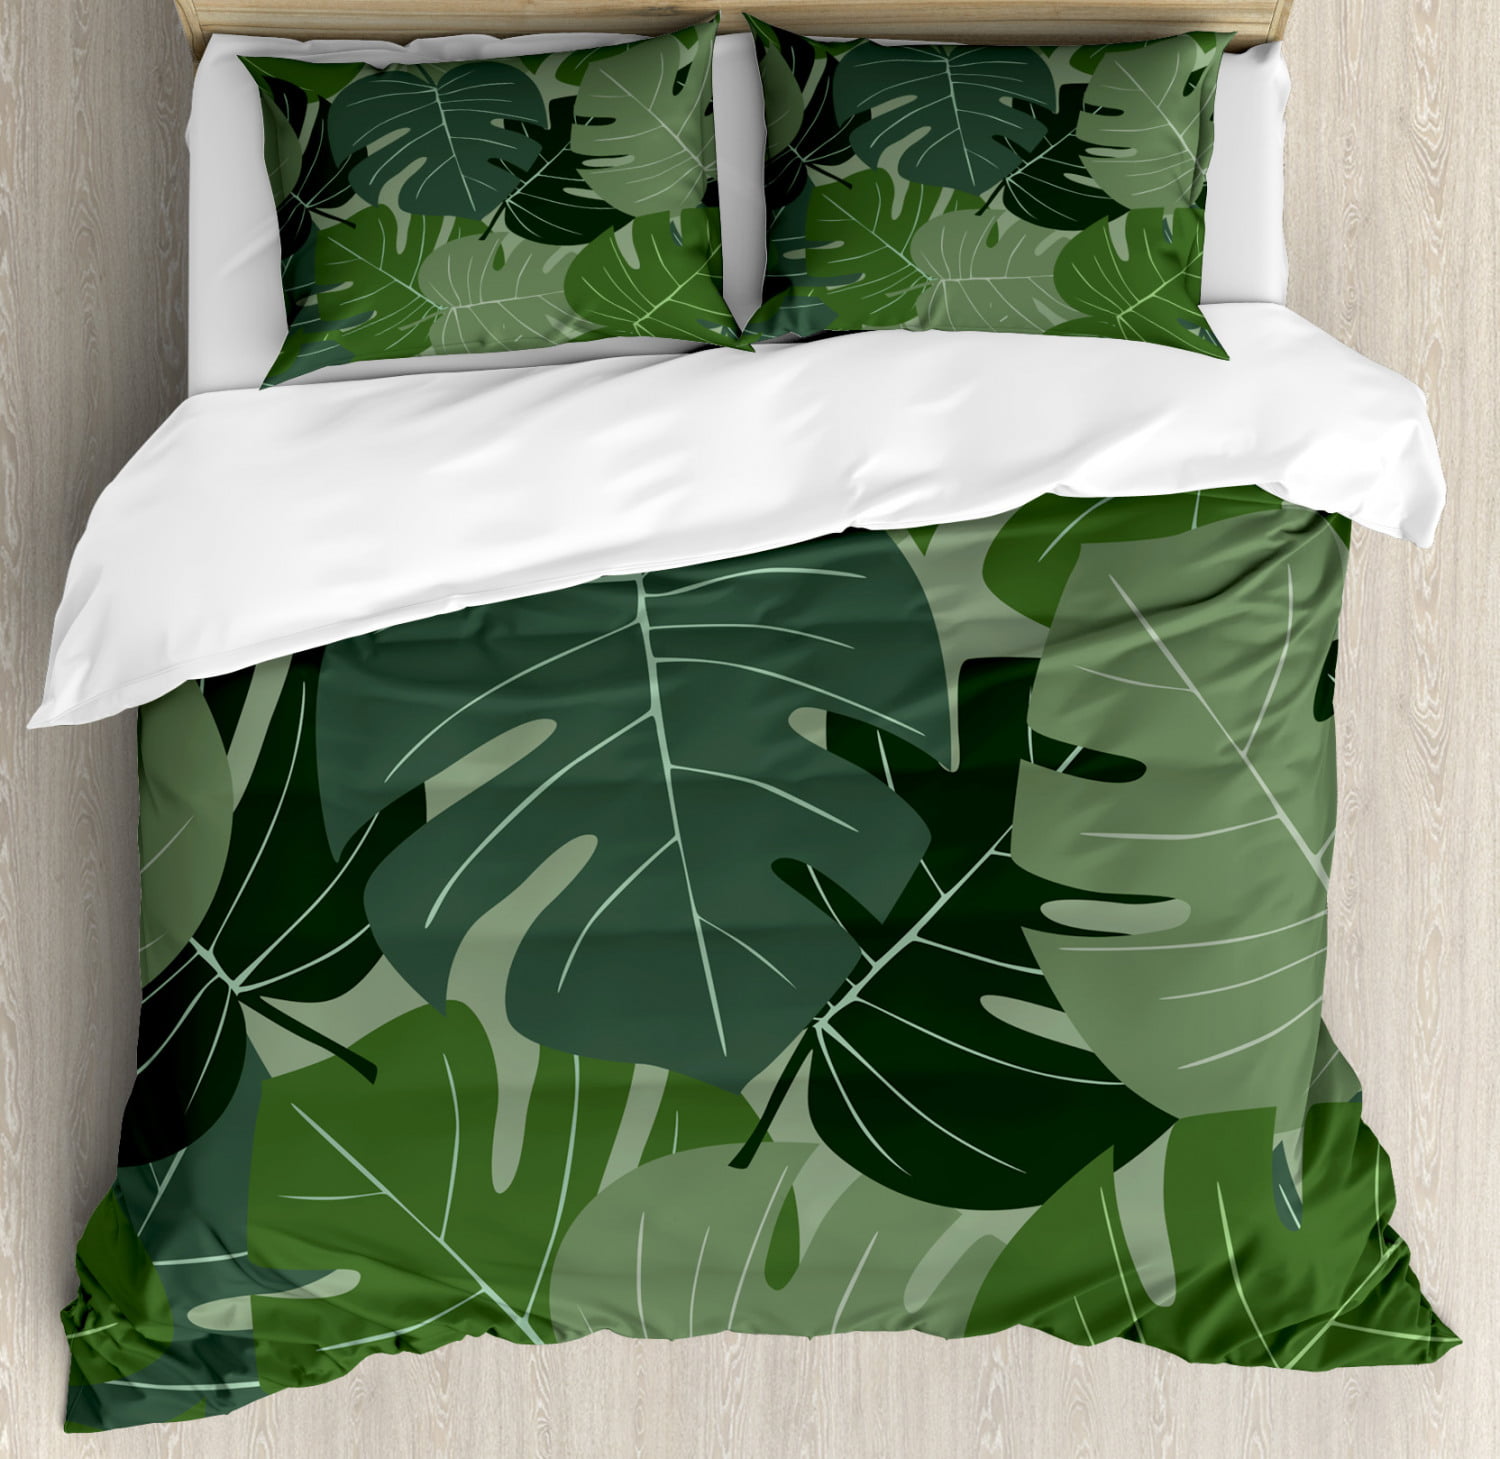 Tropical Palm Camo Comforter & Sheet Set Reversible Bedding Black Olive FULL 